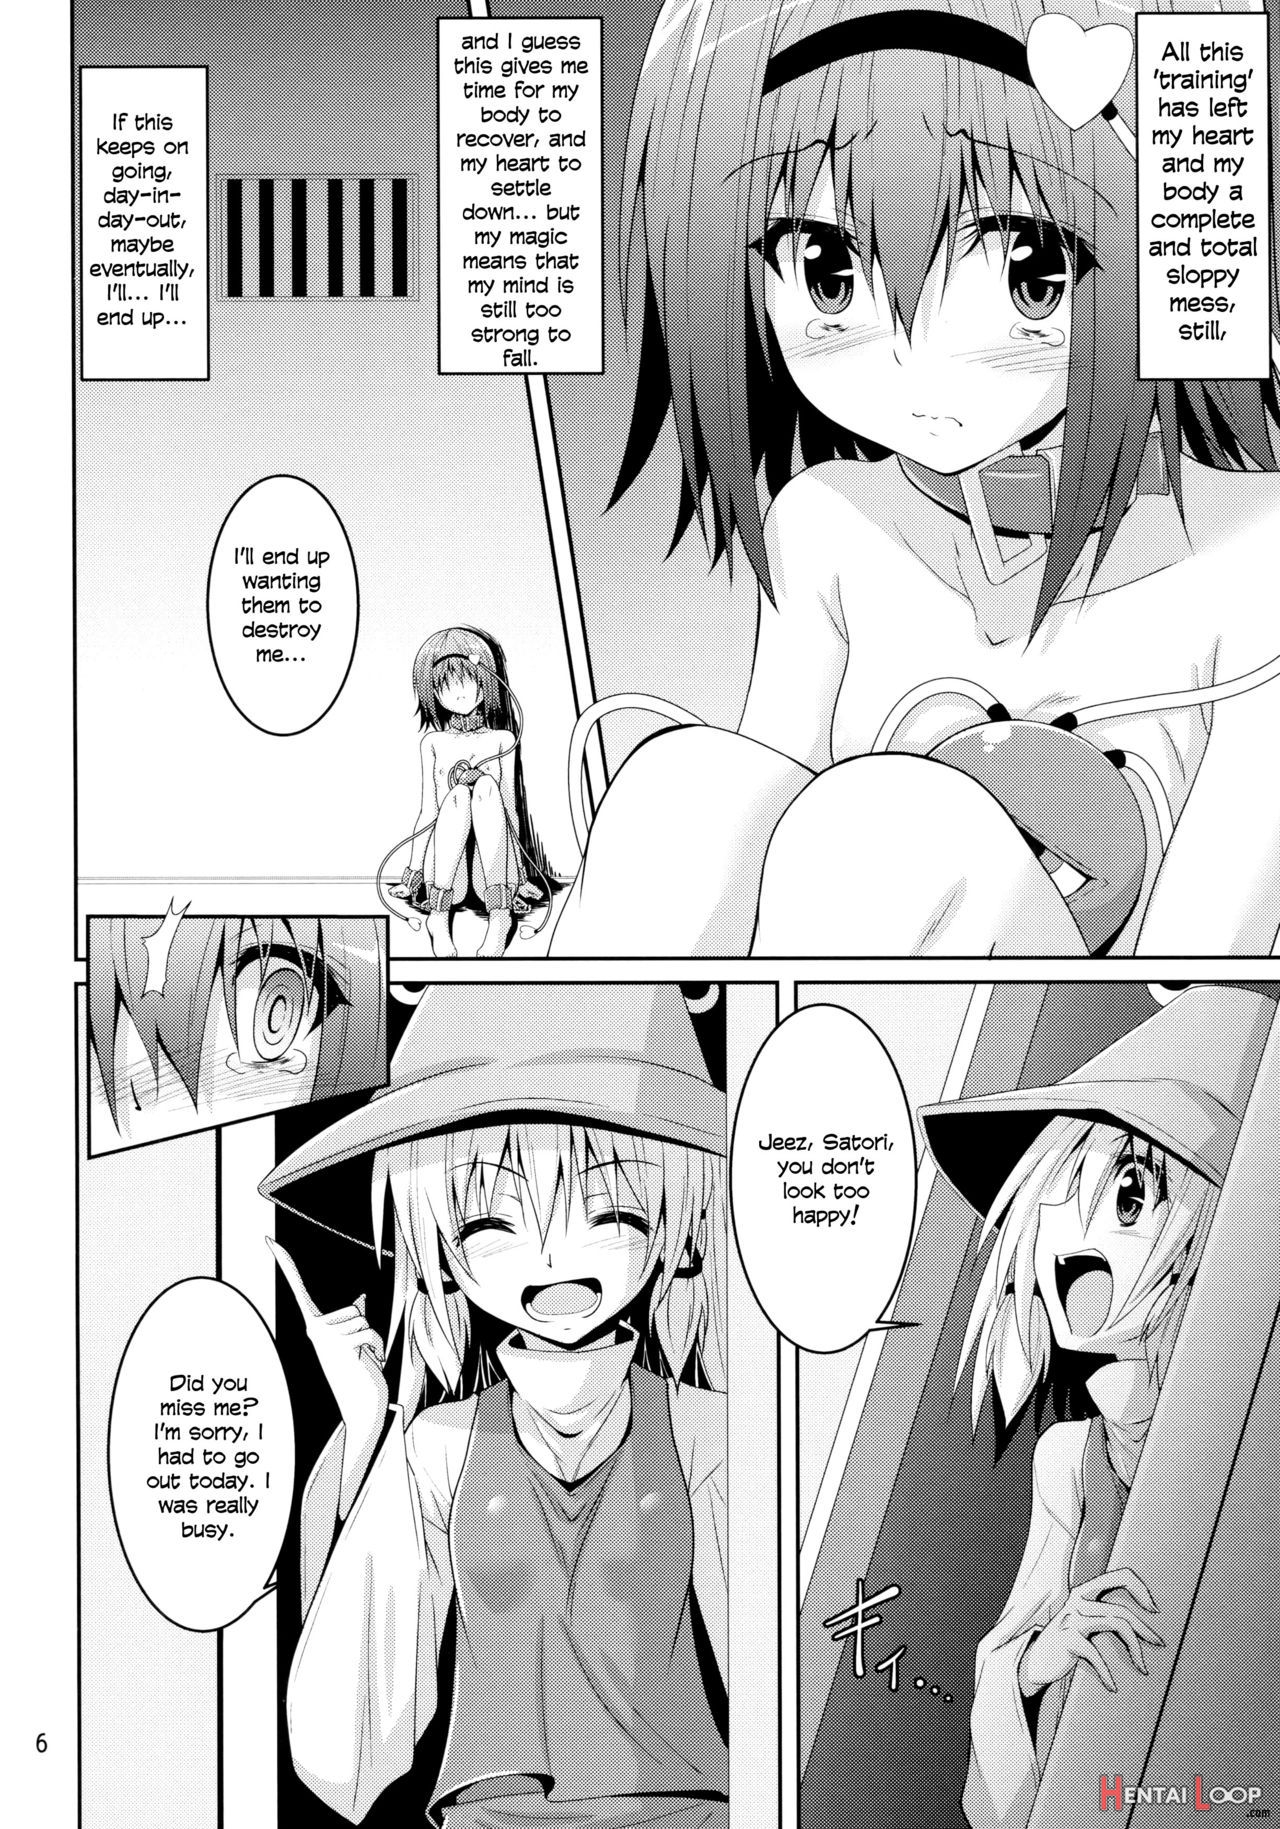 Satori Gokusatori's Room Part 5 page 5